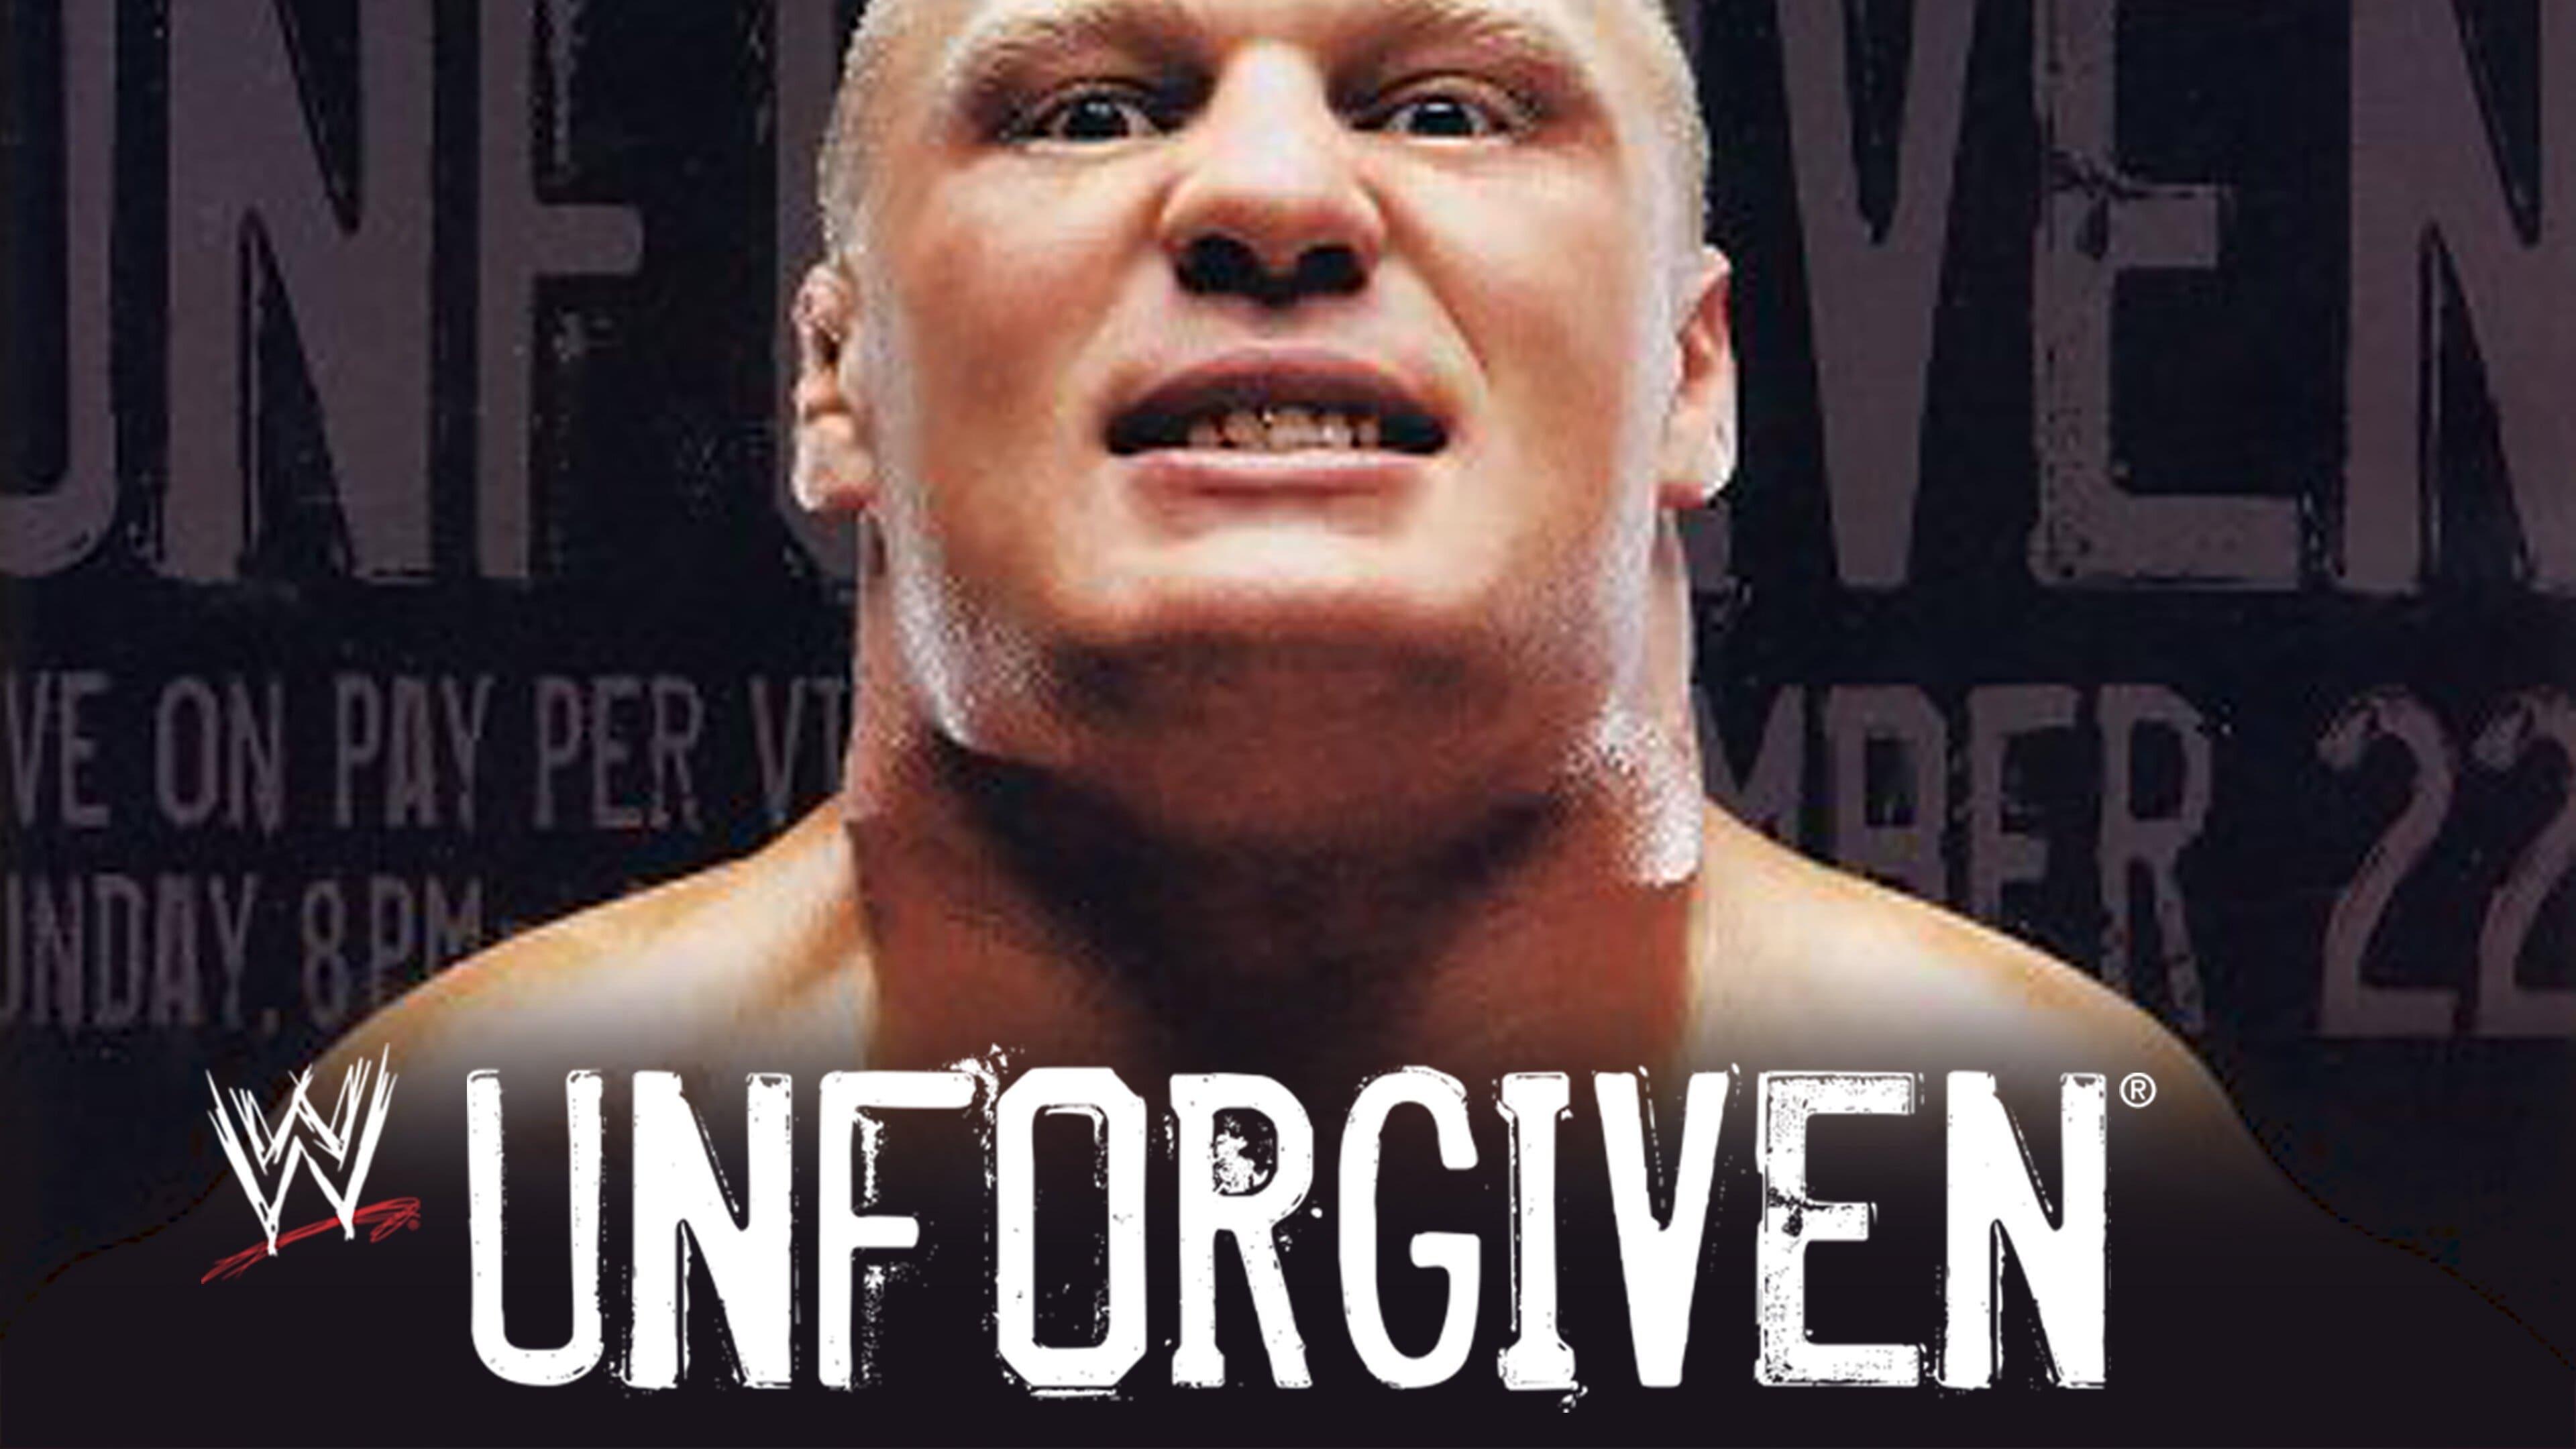 WWE Unforgiven 2002 backdrop